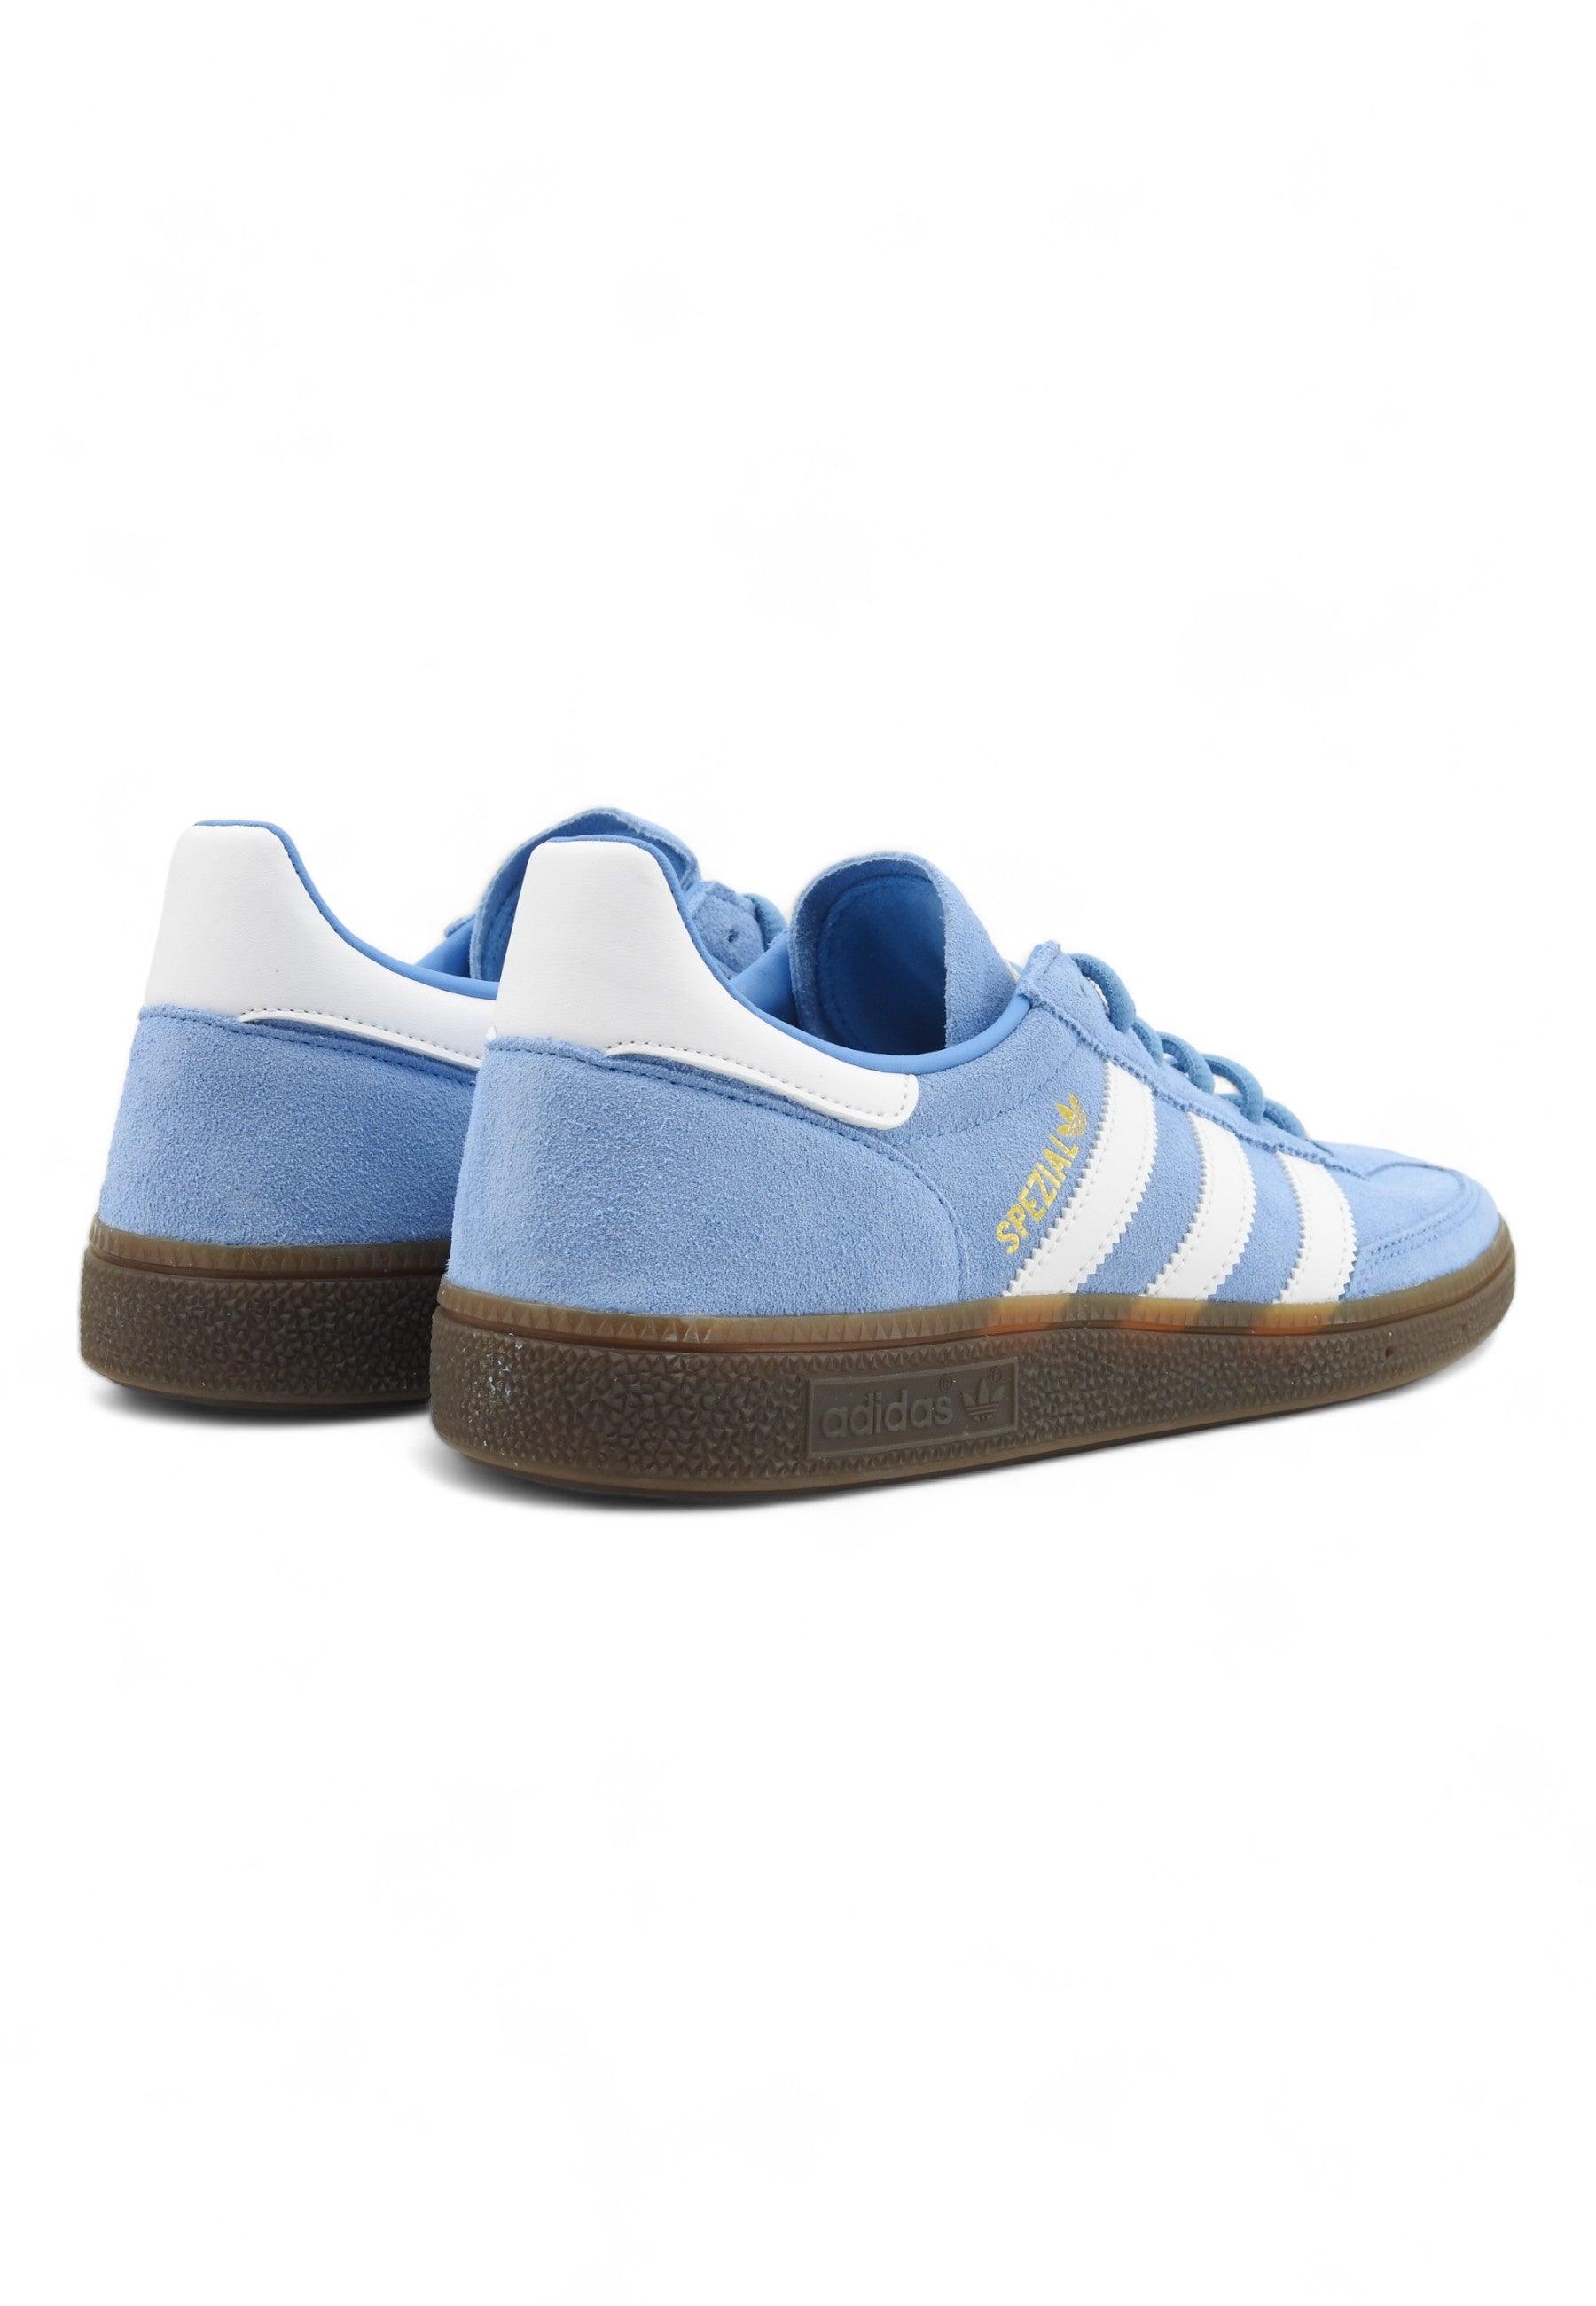 ADIDAS Special Sneaker Uomo Light Blue White BD7632 - Sandrini Calzature e Abbigliamento